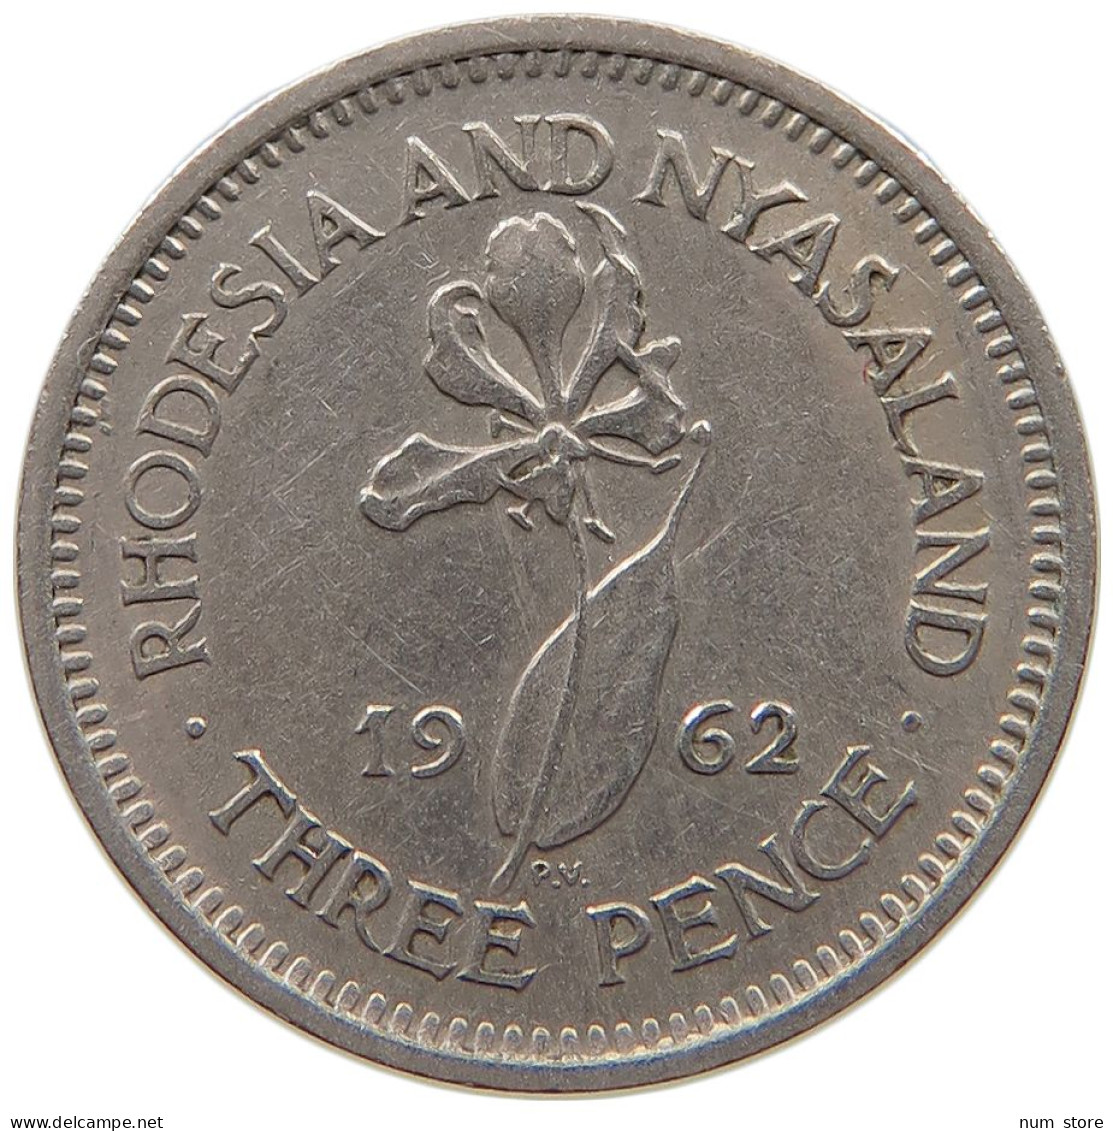 RHODESIA AND NYASALAND 3 PENCE 1962 Elizabeth II. (1952-2022) #c021 0325 - Rhodesia